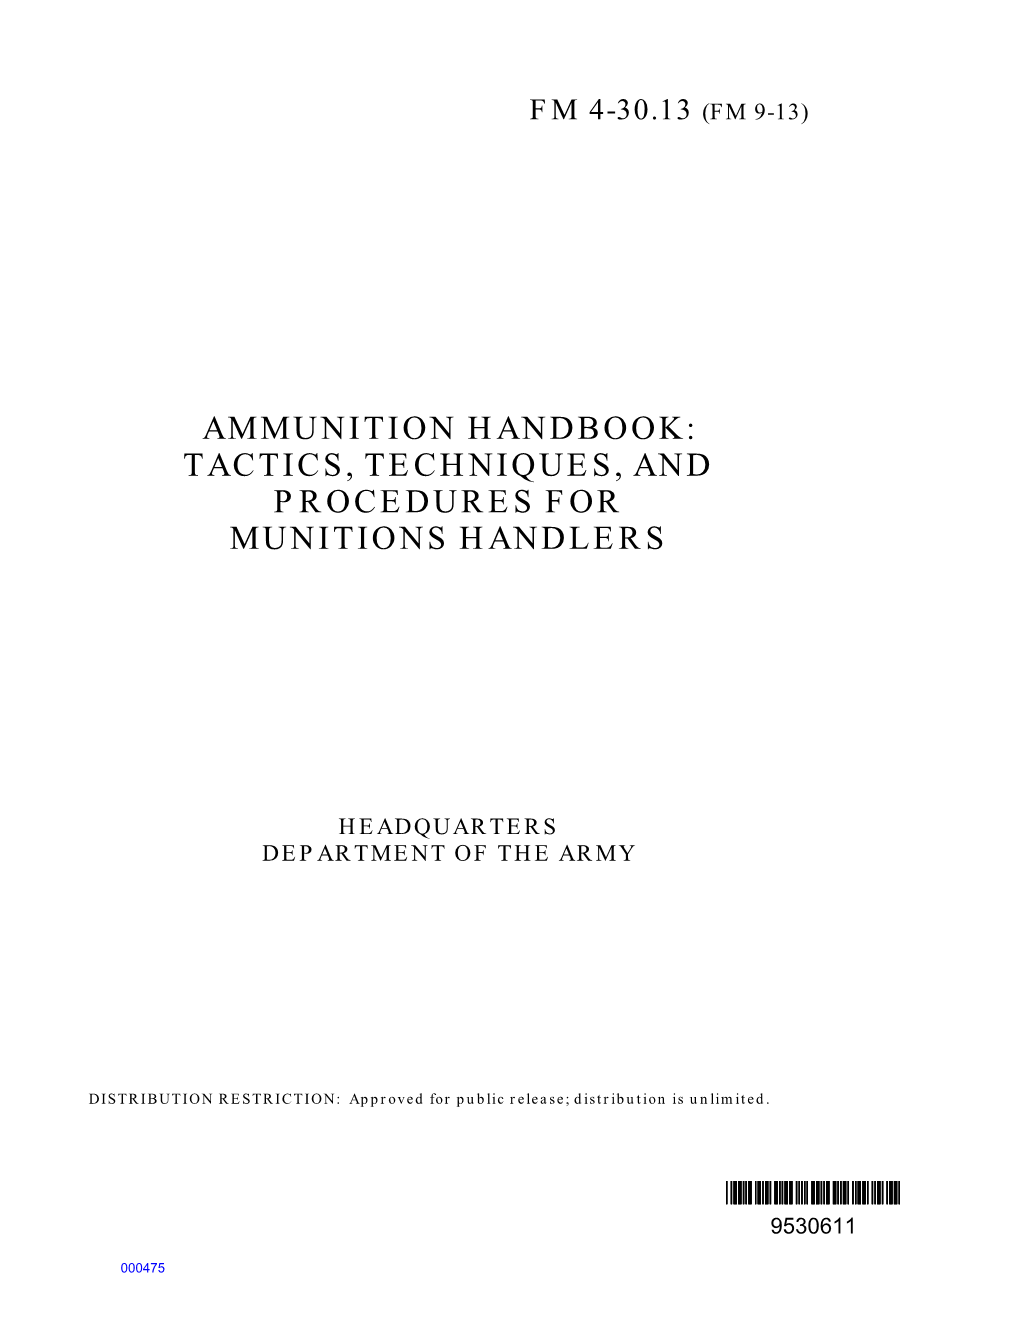 Ammunition Handbook: Tactics, Techniques, and Procedures for Munitions Handlers